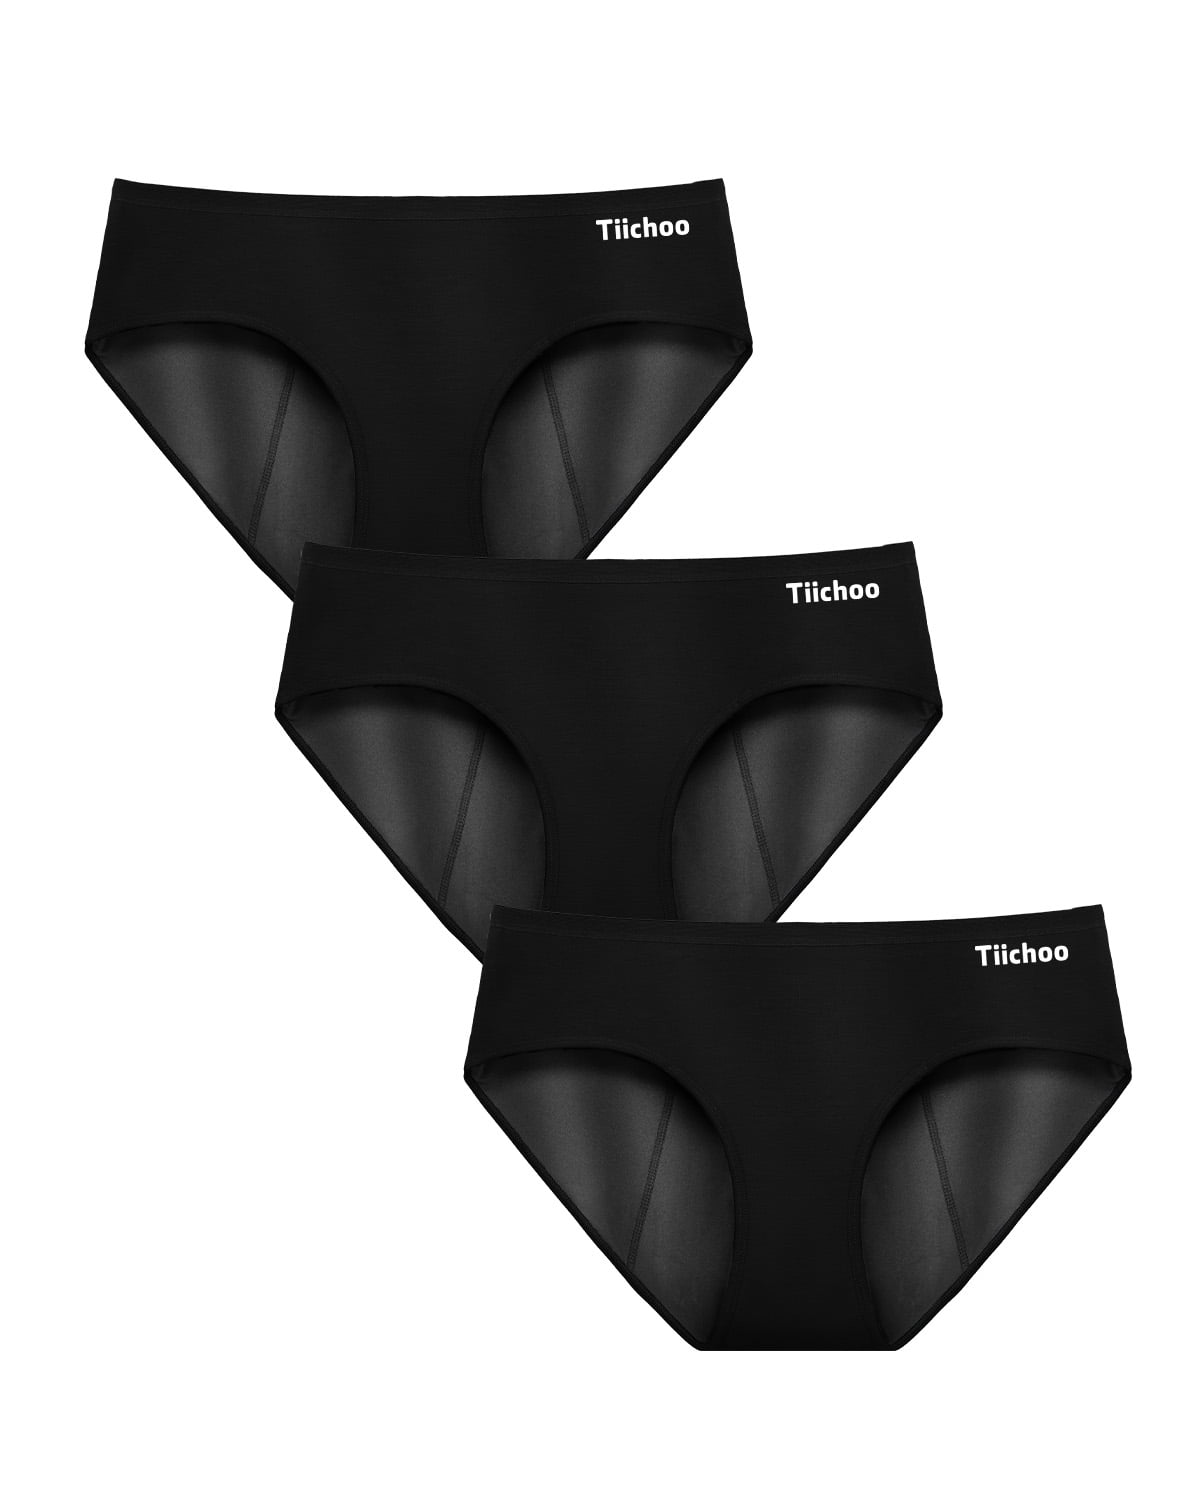 TIICHOO Period Underwear for Women Silky Soft Absorbent Hipster Panties  Teen Menstrual Underwear 3 Pack (3X-Large, Black/Burgundy/Charcoal Gray)